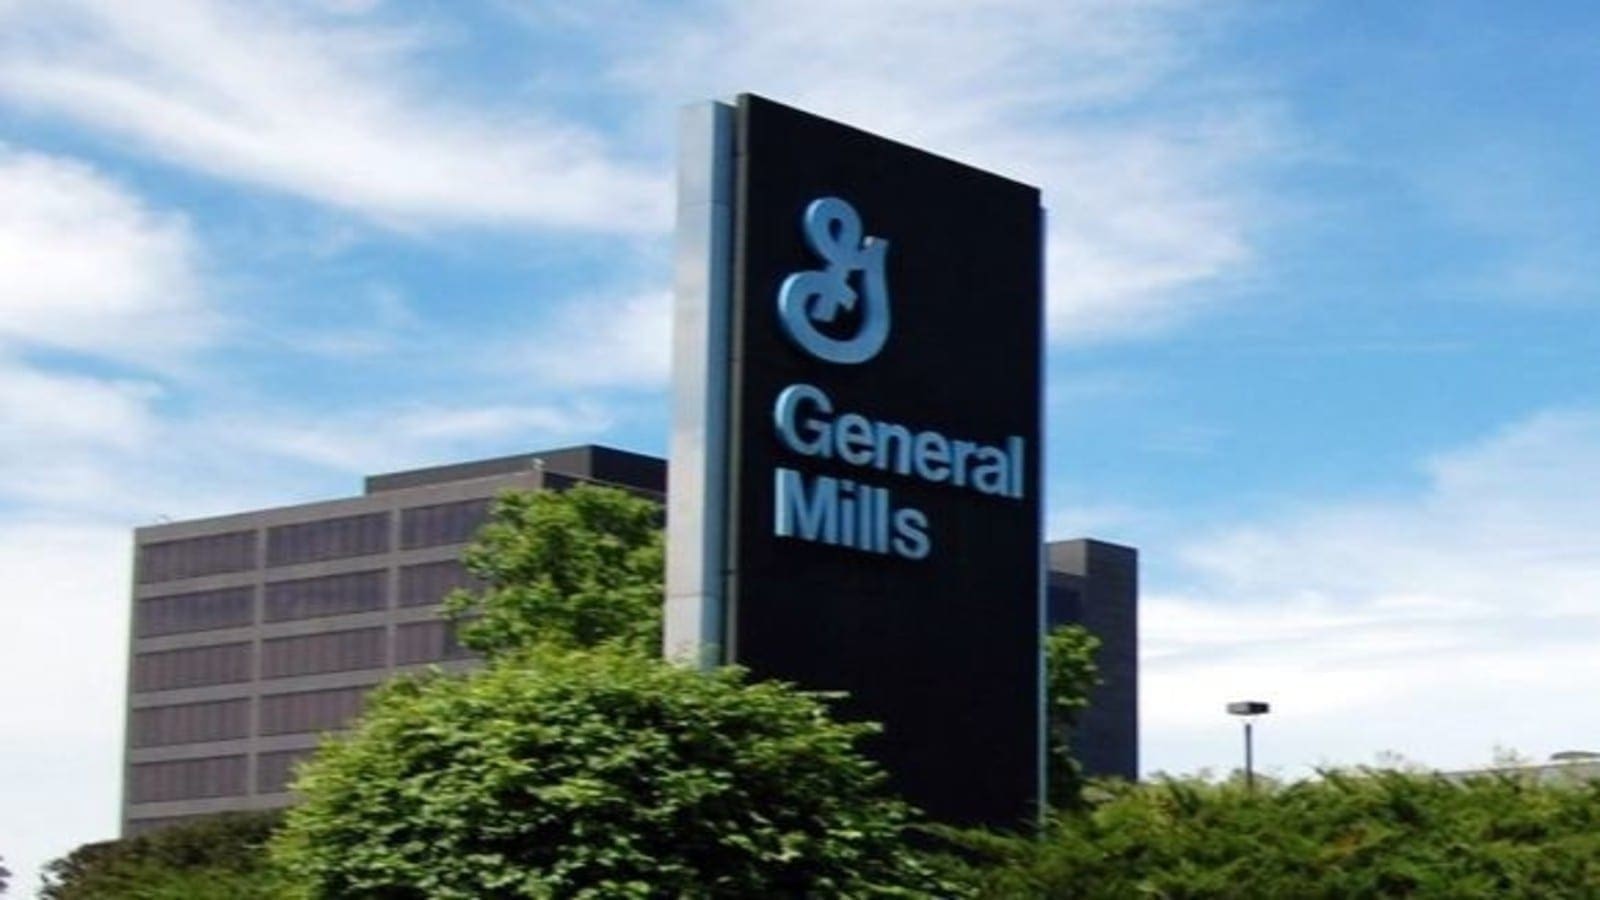 Meals, Baking units push General Mills’ net sales 7% higher in second quarter